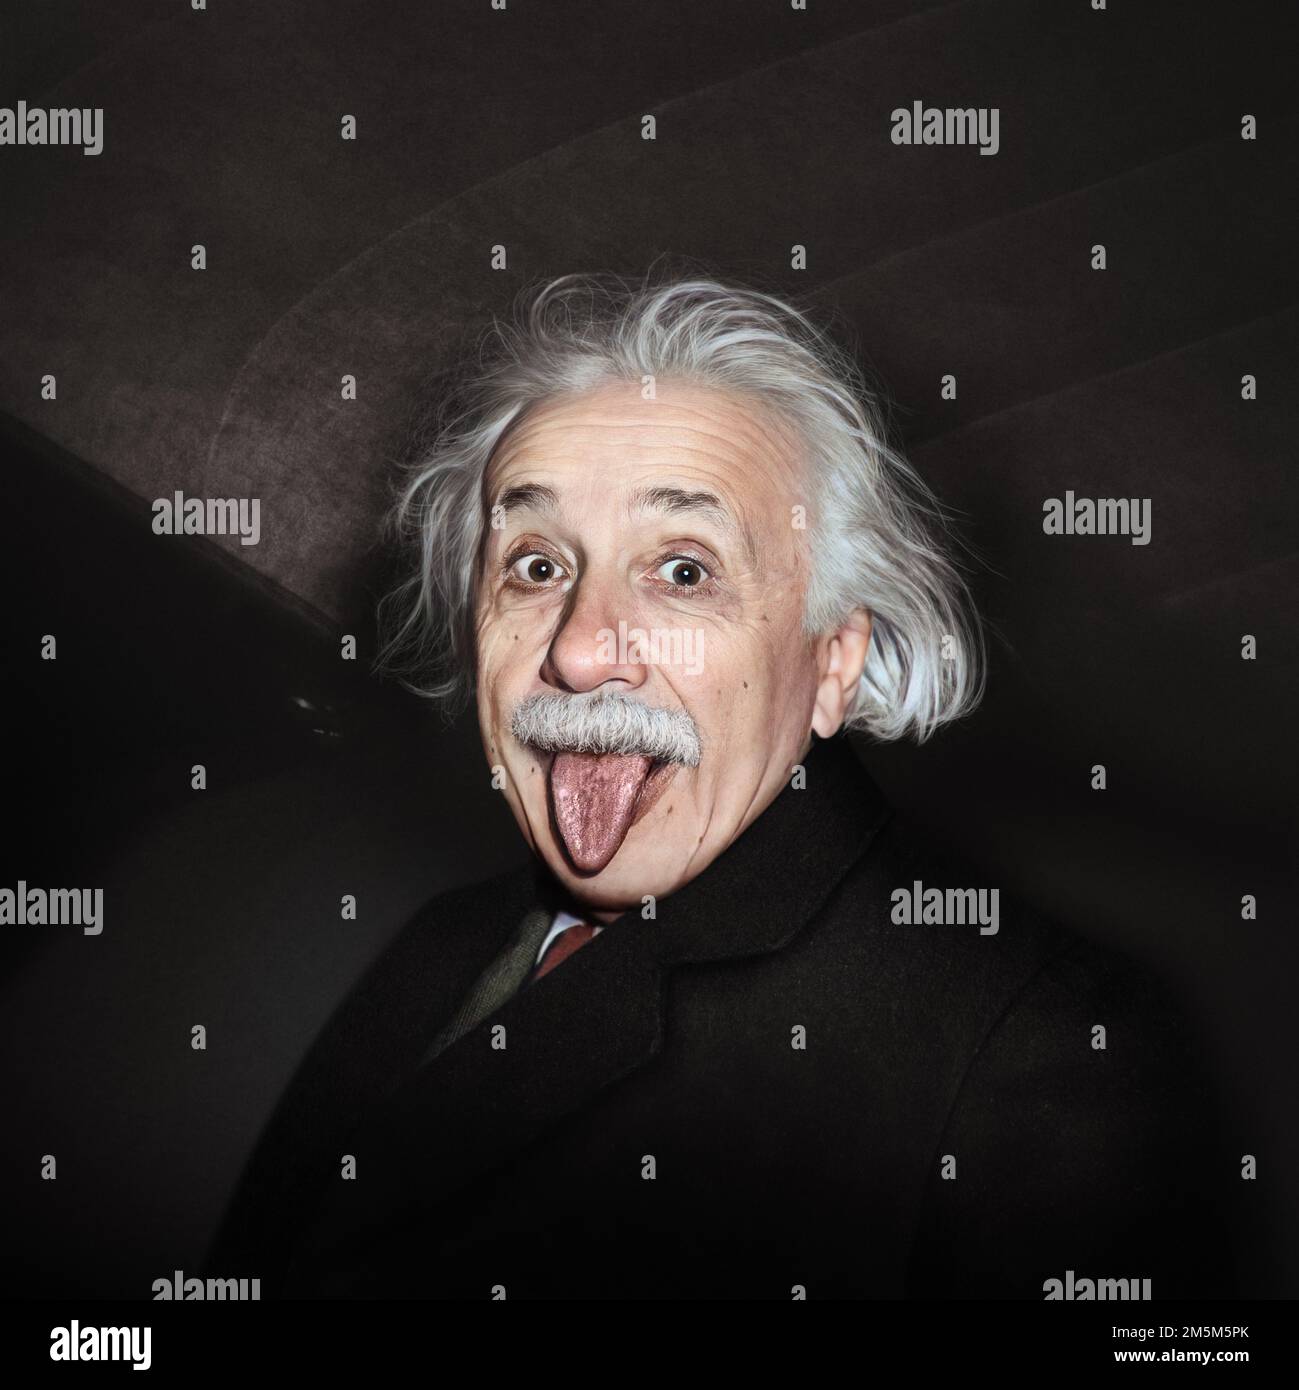 Albert Einstein qui sort sa langue Banque D'Images